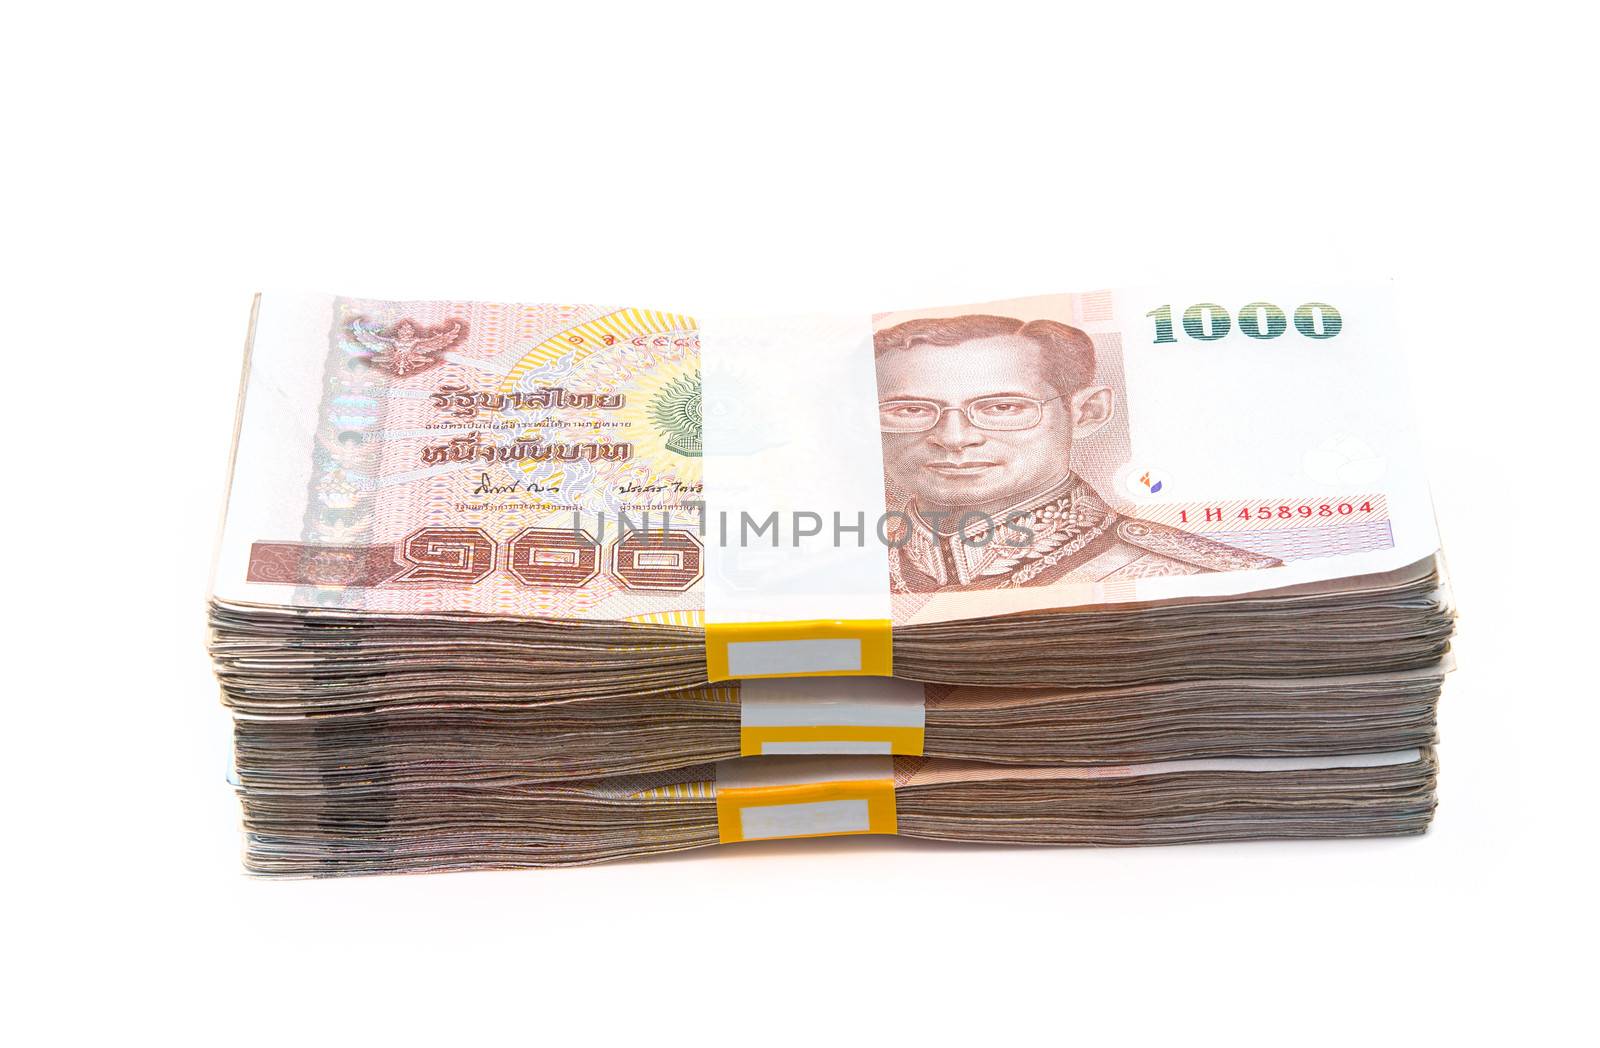 Stacks of 1000 baht bills by Sorapop